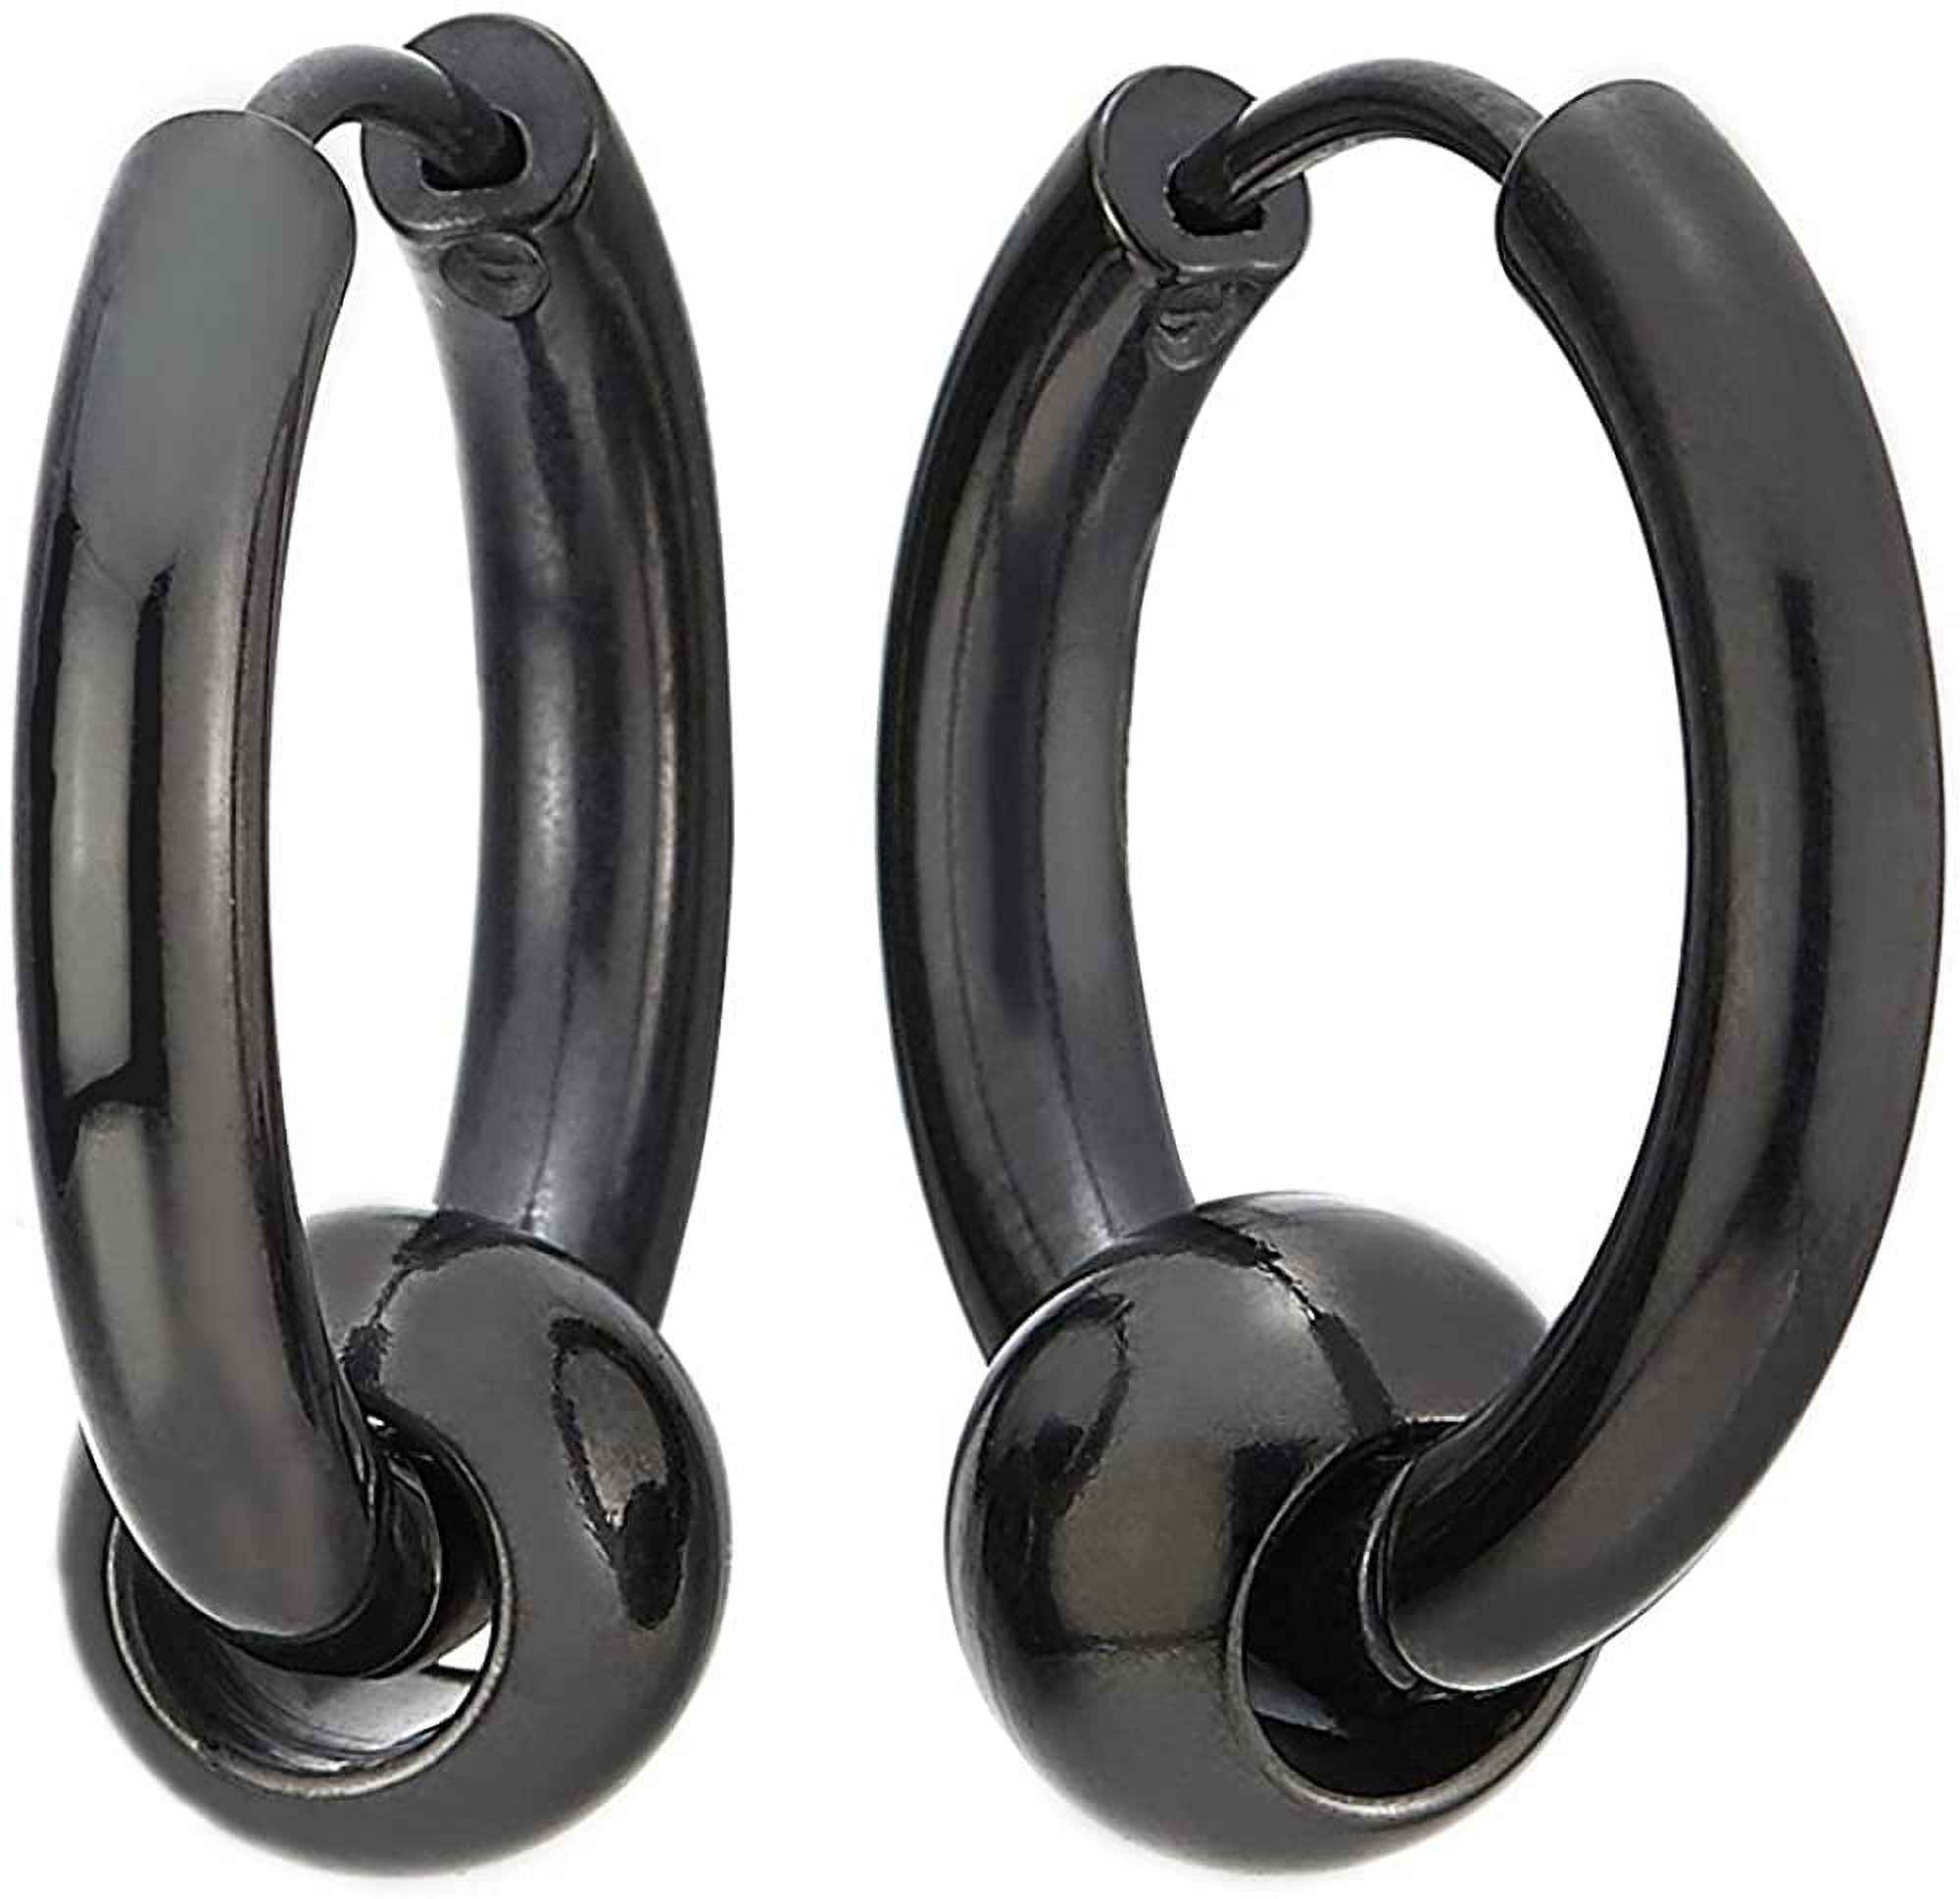 New Unique Punk Earrings 3D Creepy Black Spider Earrings 2021 Fashion Women Men  Wear Earrings Before And After Halloween Party - AliExpress